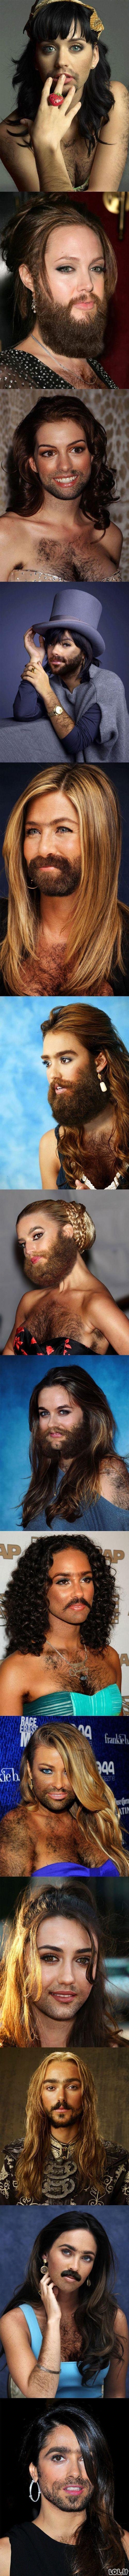 Žinomos moterys su barzdomis